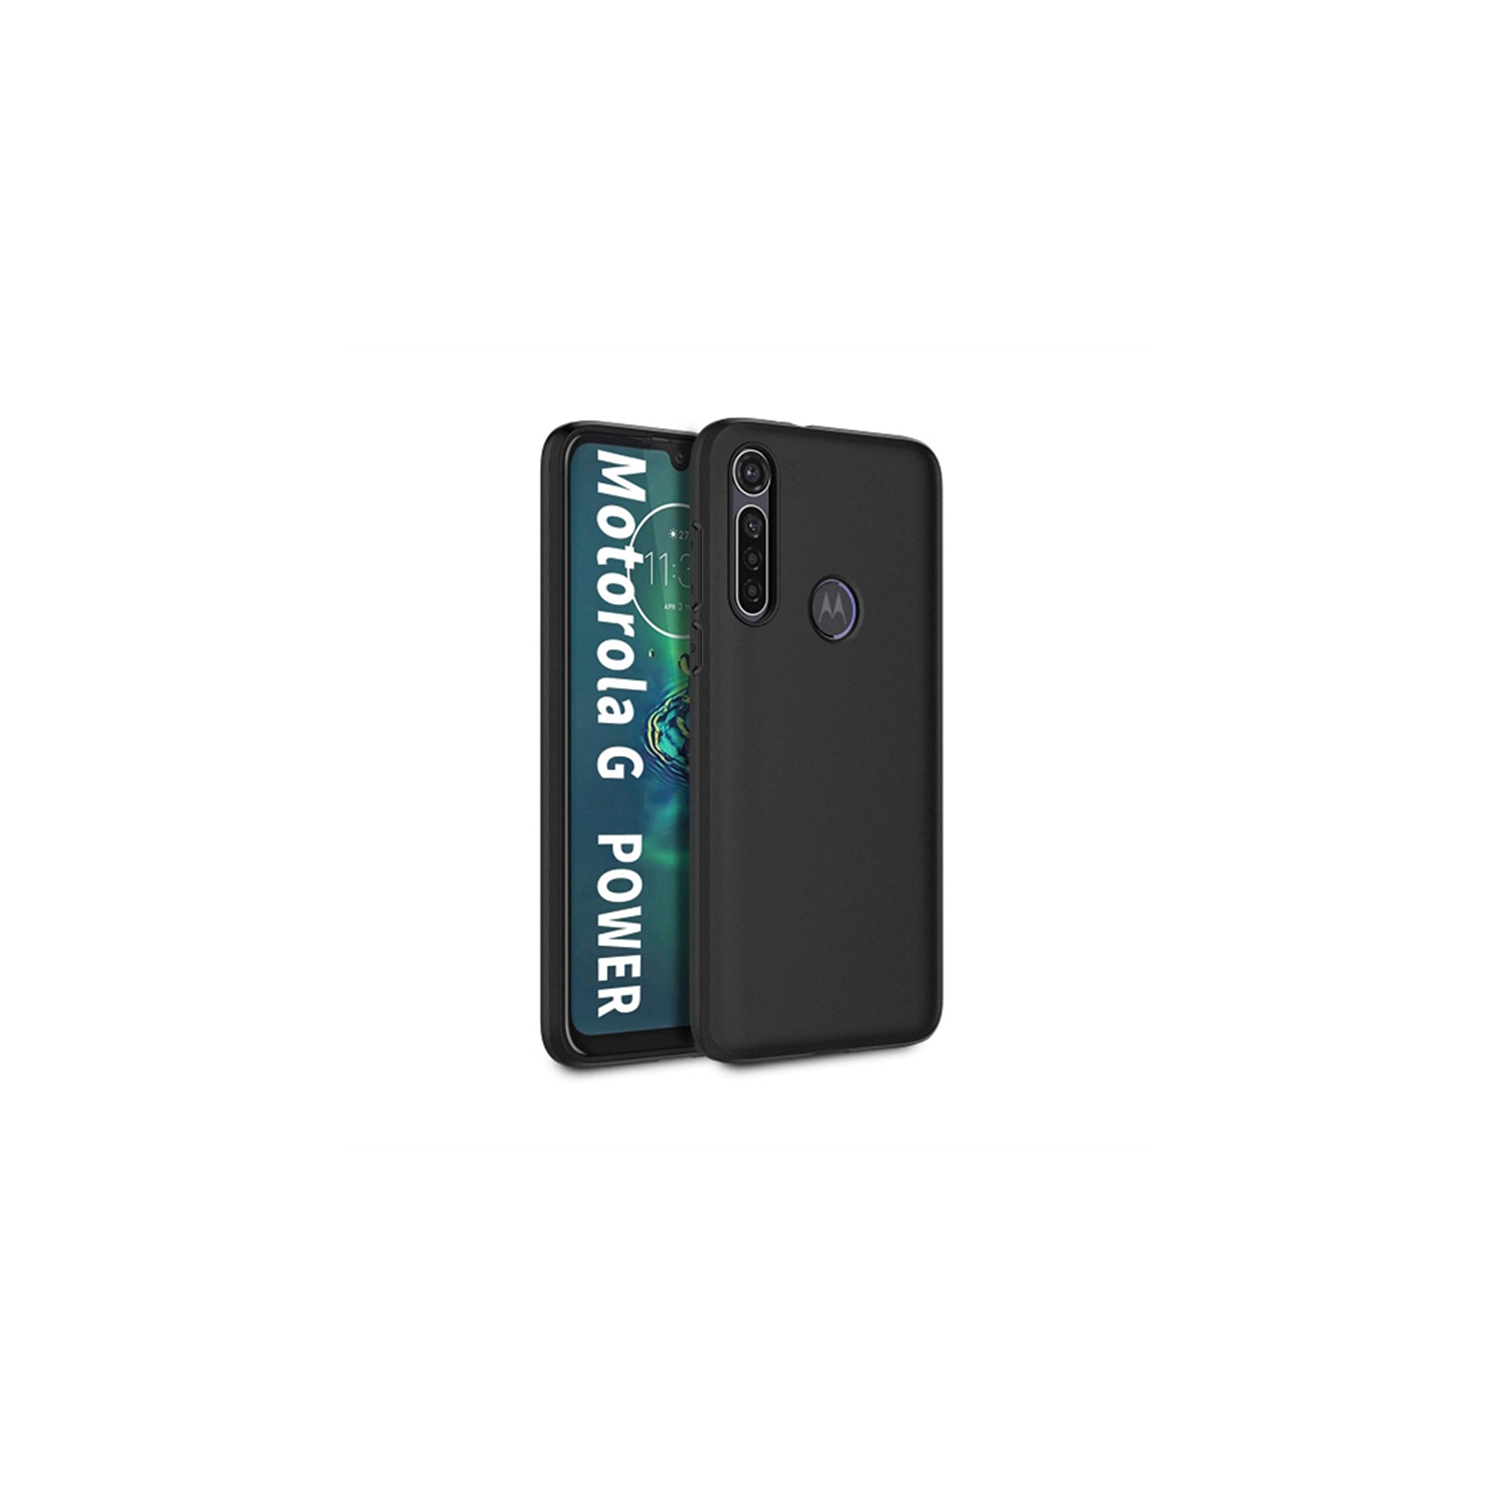 【CSmart】 Ultra Thin Soft TPU Silicone Jelly Bumper Back Cover Case for Motorola Moto G Power 2020, Black